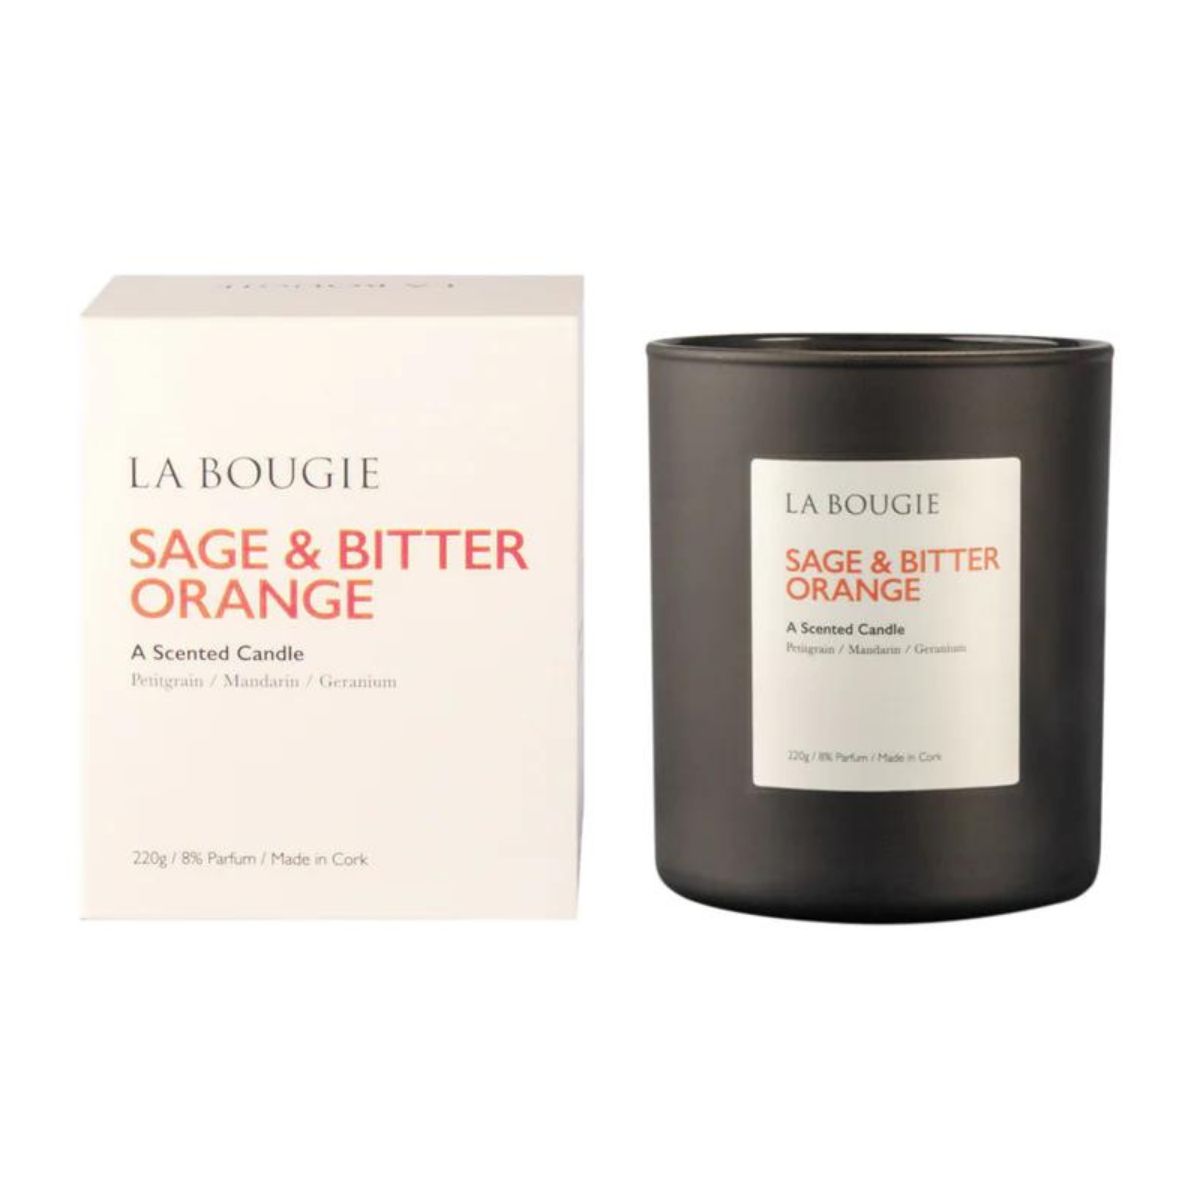 La Bougie Sage & Bitter Orange Candle